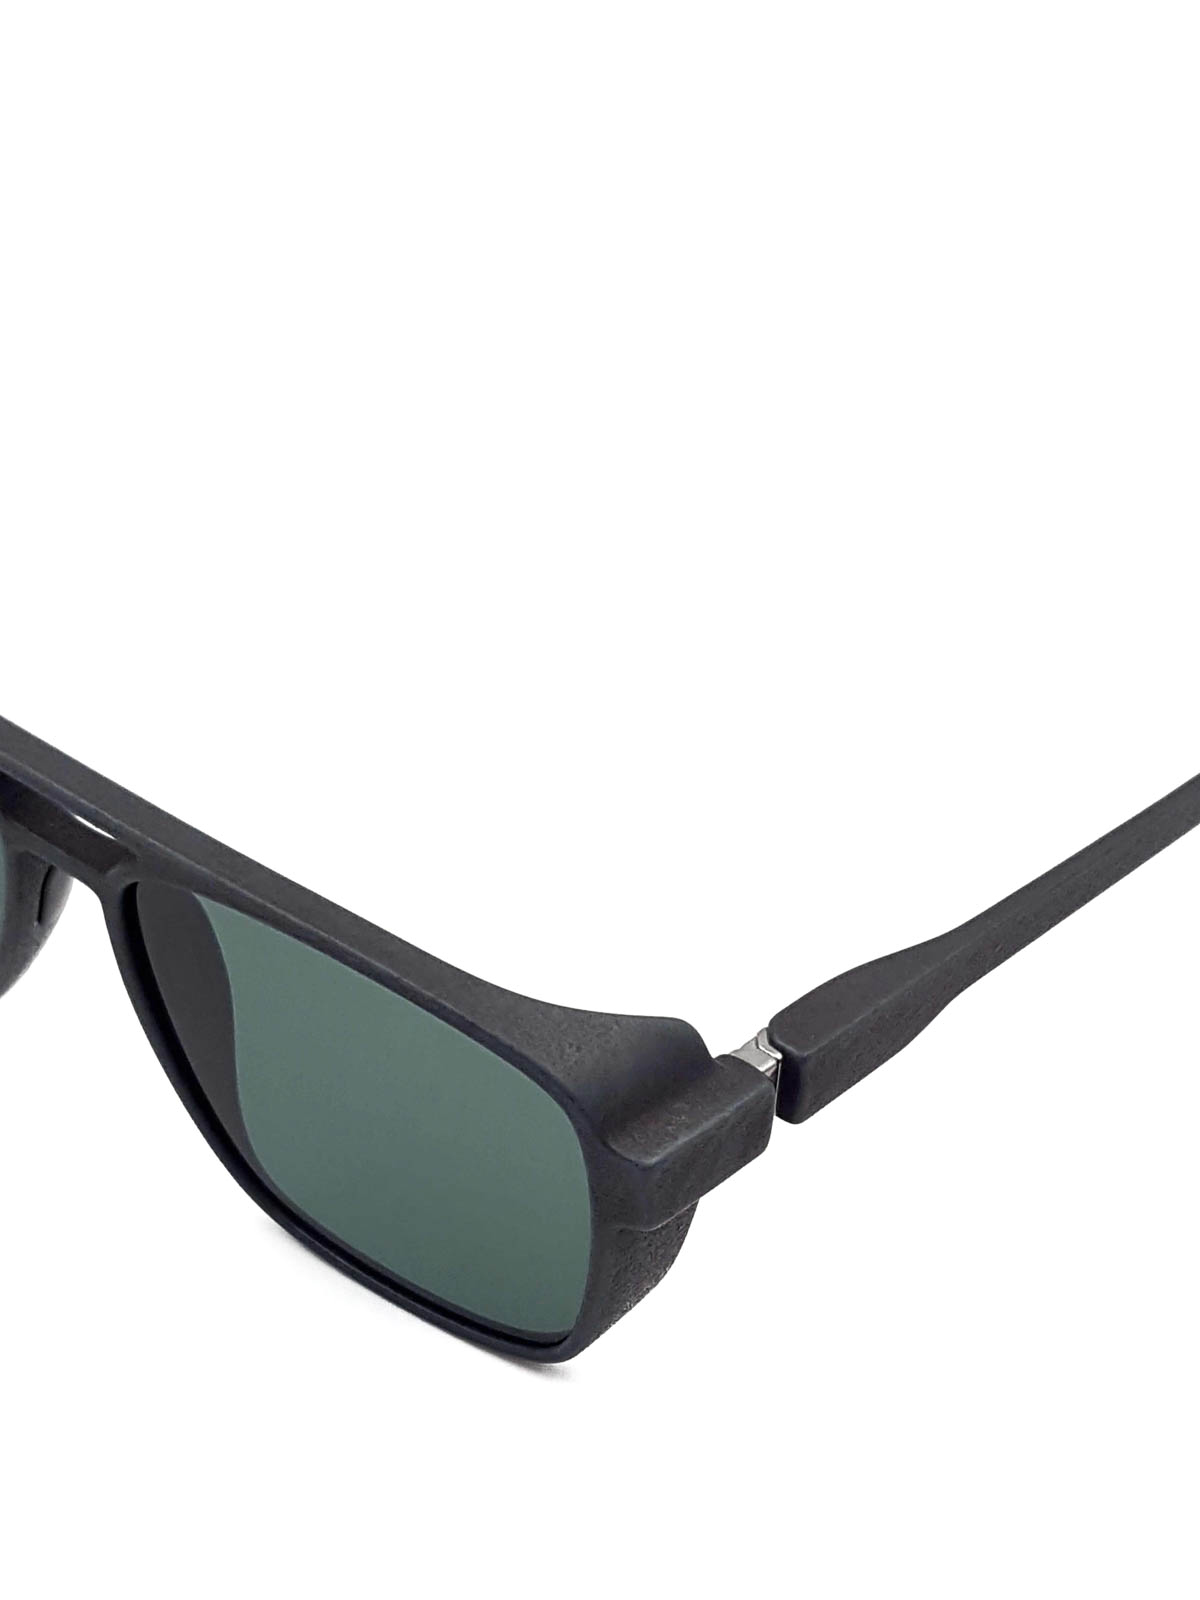 Sunglasses Mykita - Kappa Md8 sunglasses